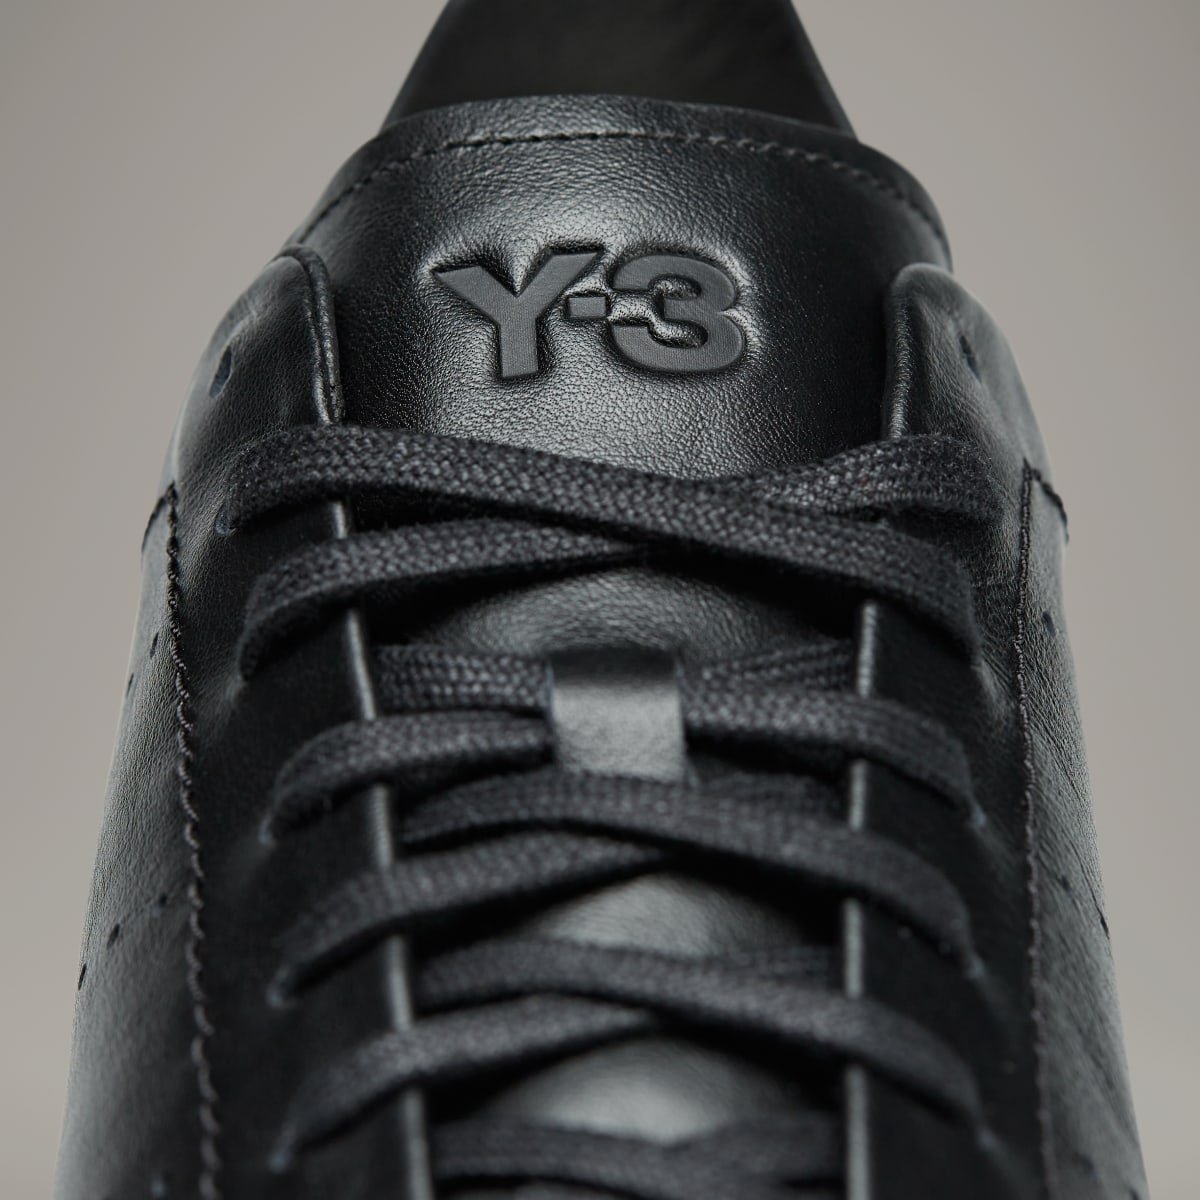 Adidas Y-3 Stan Smith. 10